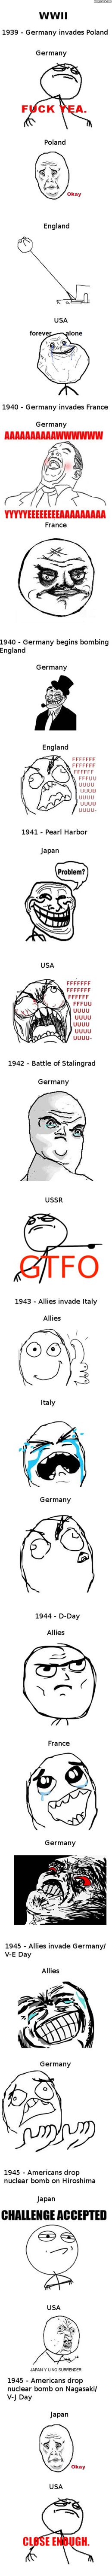 World War 2 Explained